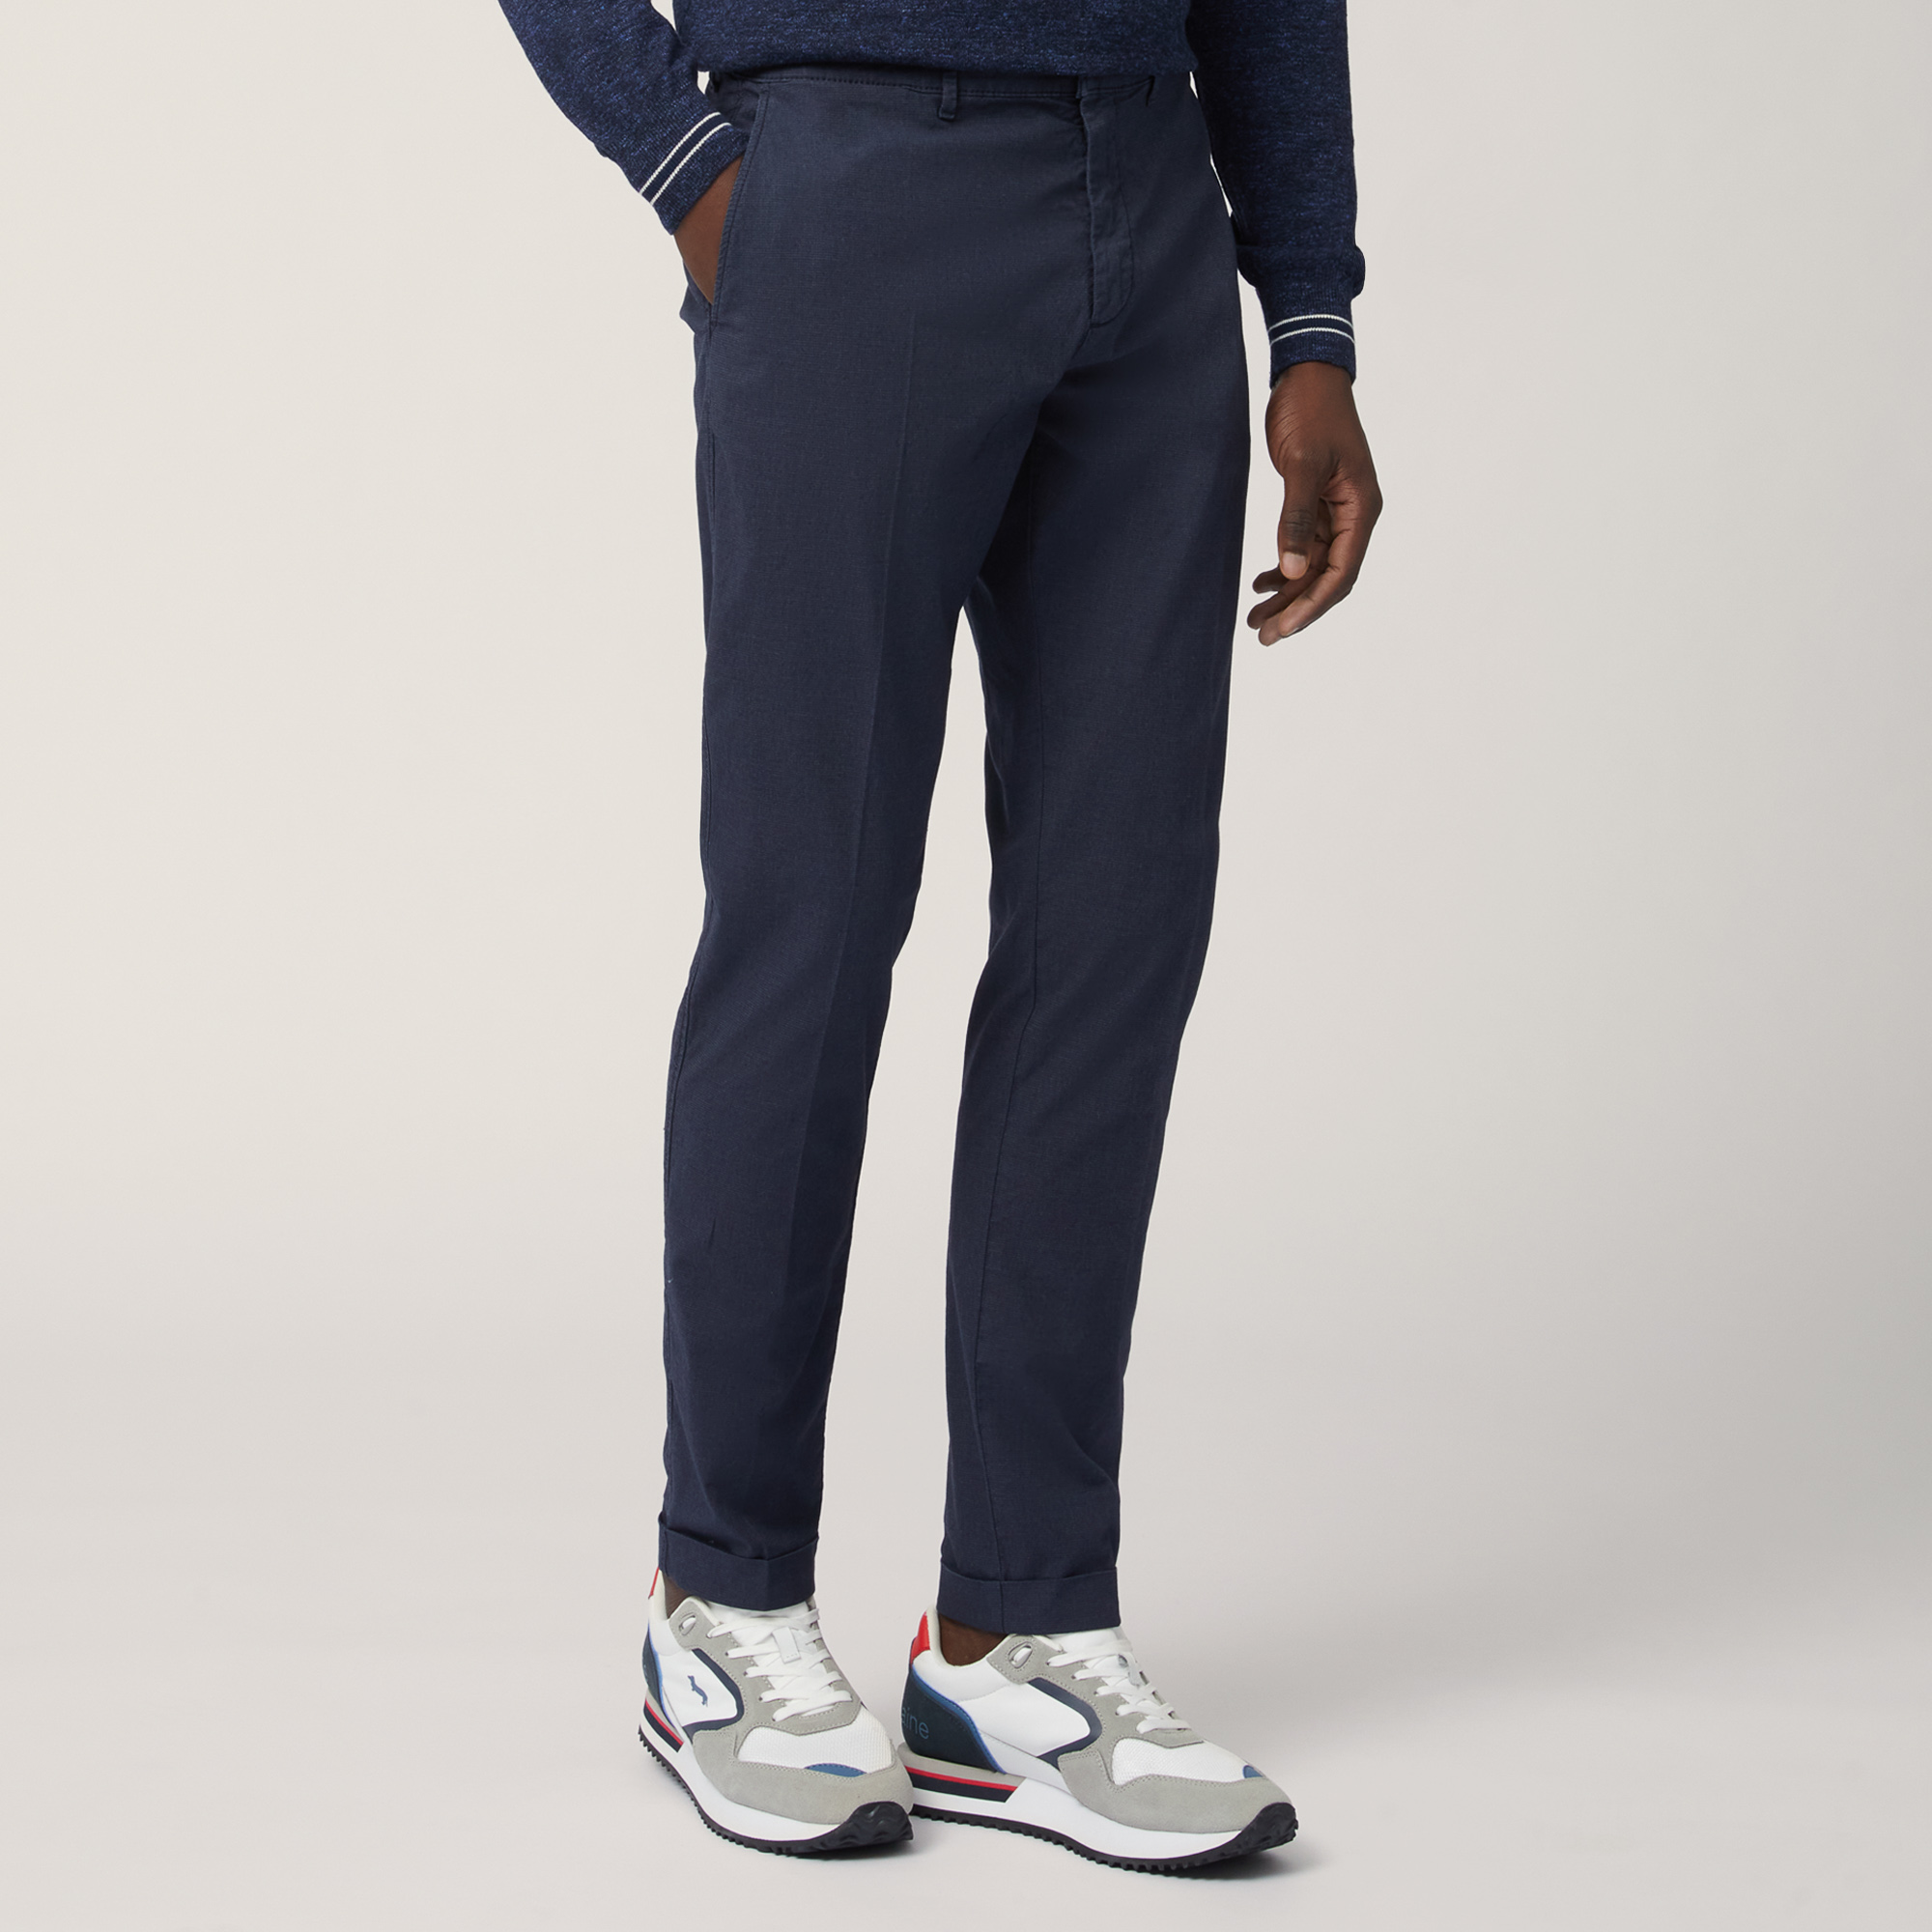 Pantaloni Chino Slim Fit, Blu Navy, large